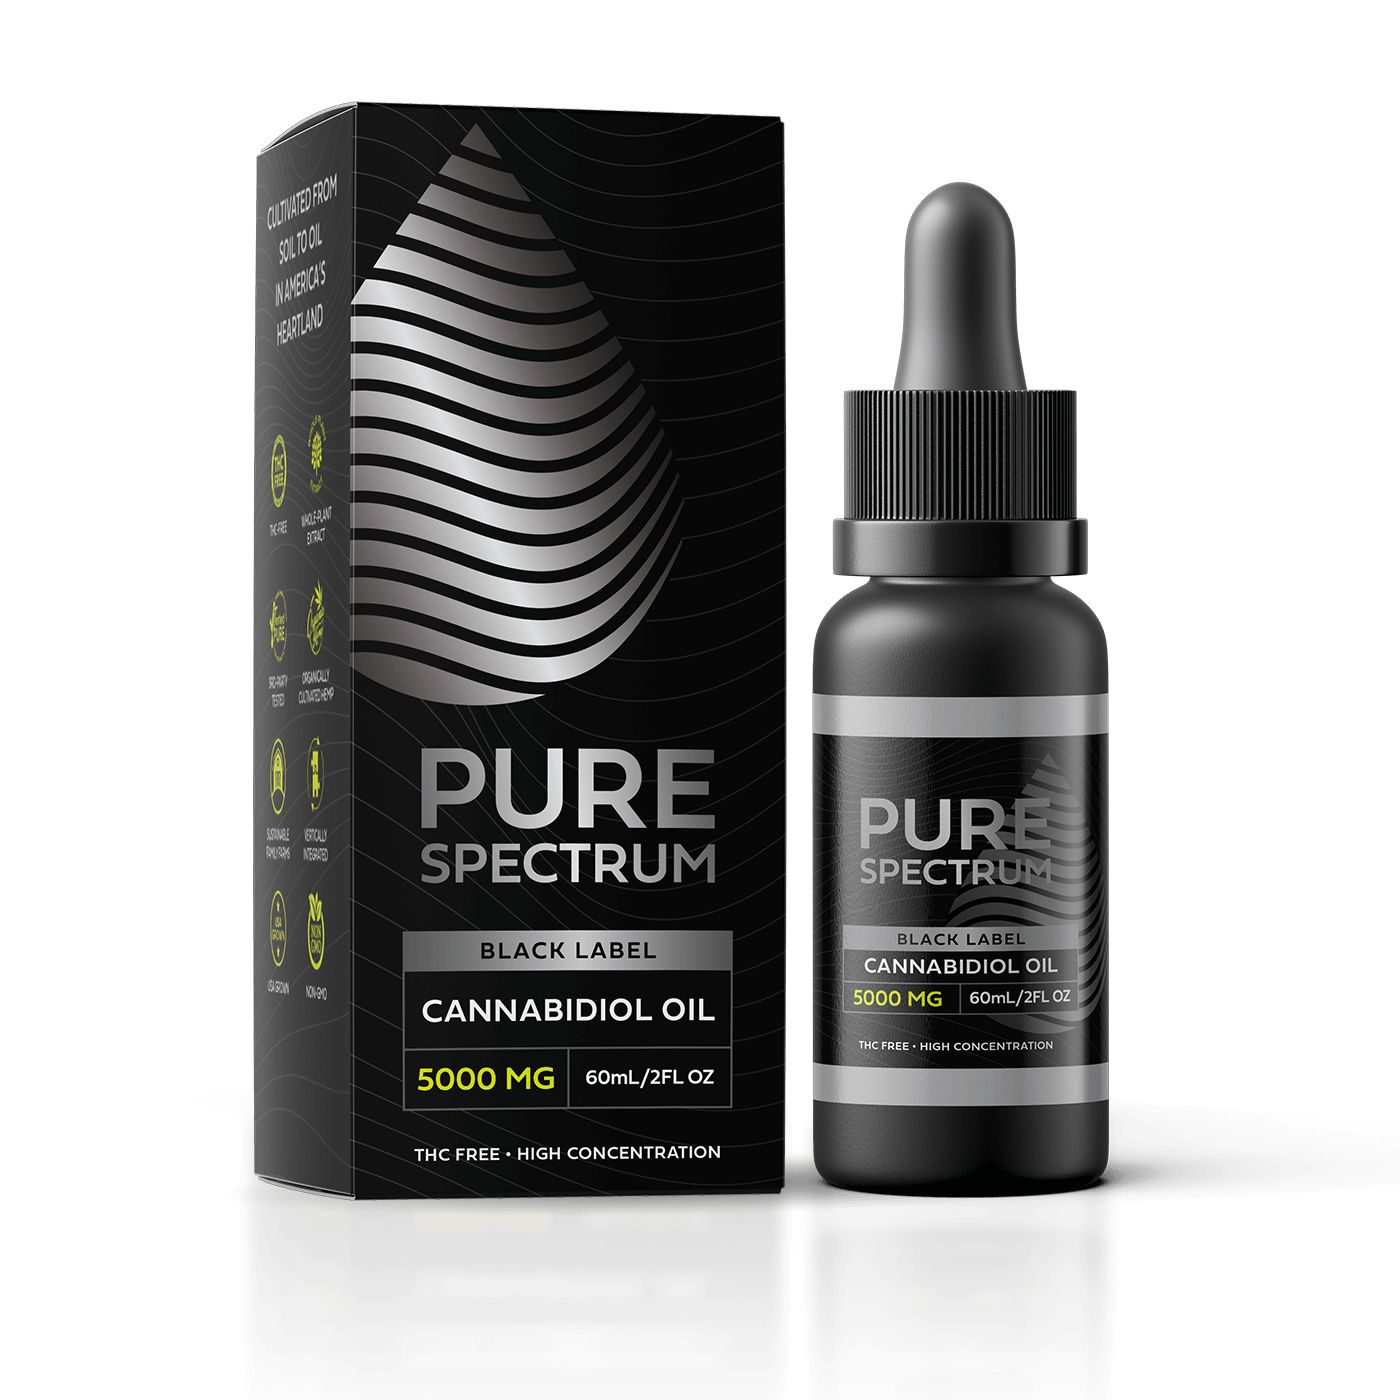 Pure Spectrum Black Label Cannabidiol Oil 5000 mg image